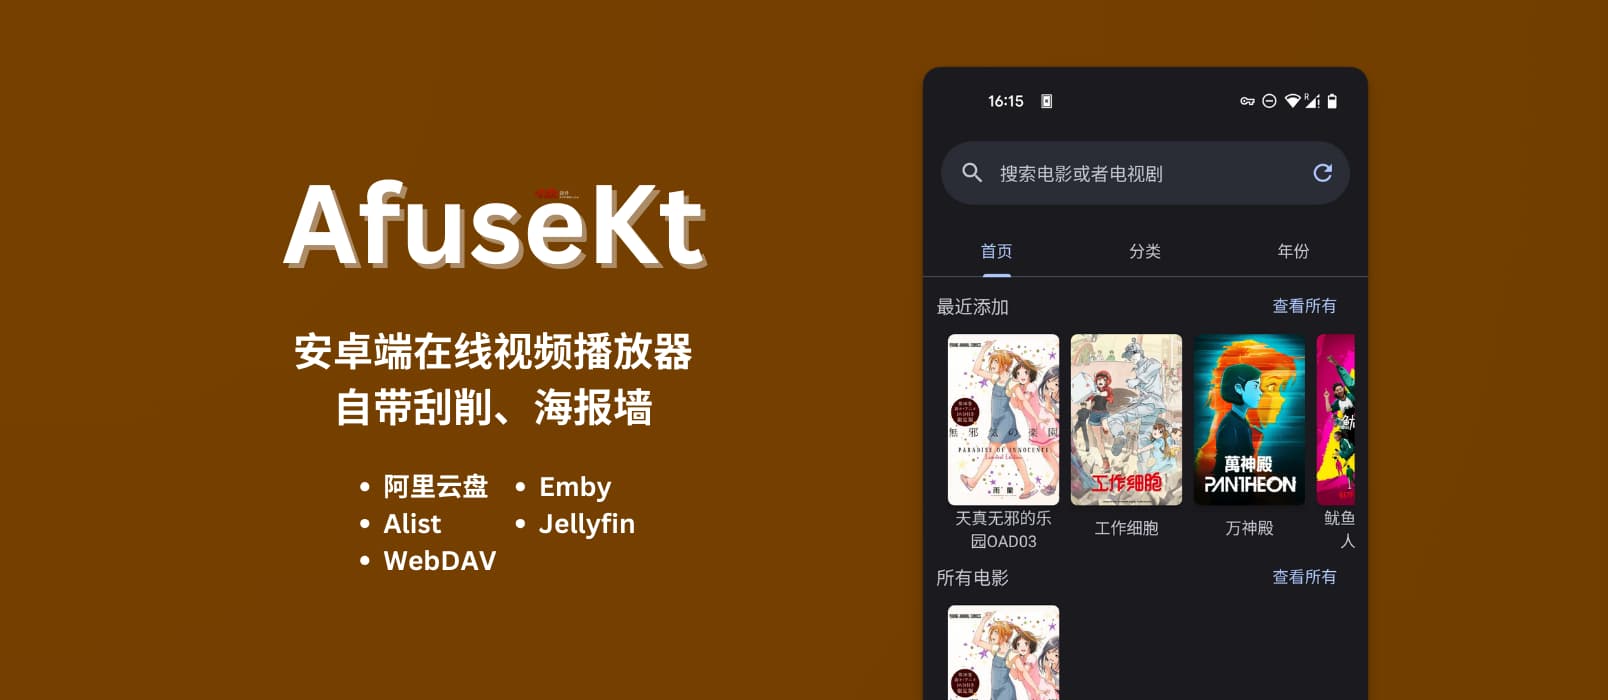 AfuseKt – 安卓端在线视频播放器：阿里云盘、Alist、WebDAV、Emby、Jellyfin，自带刮削、海报墙